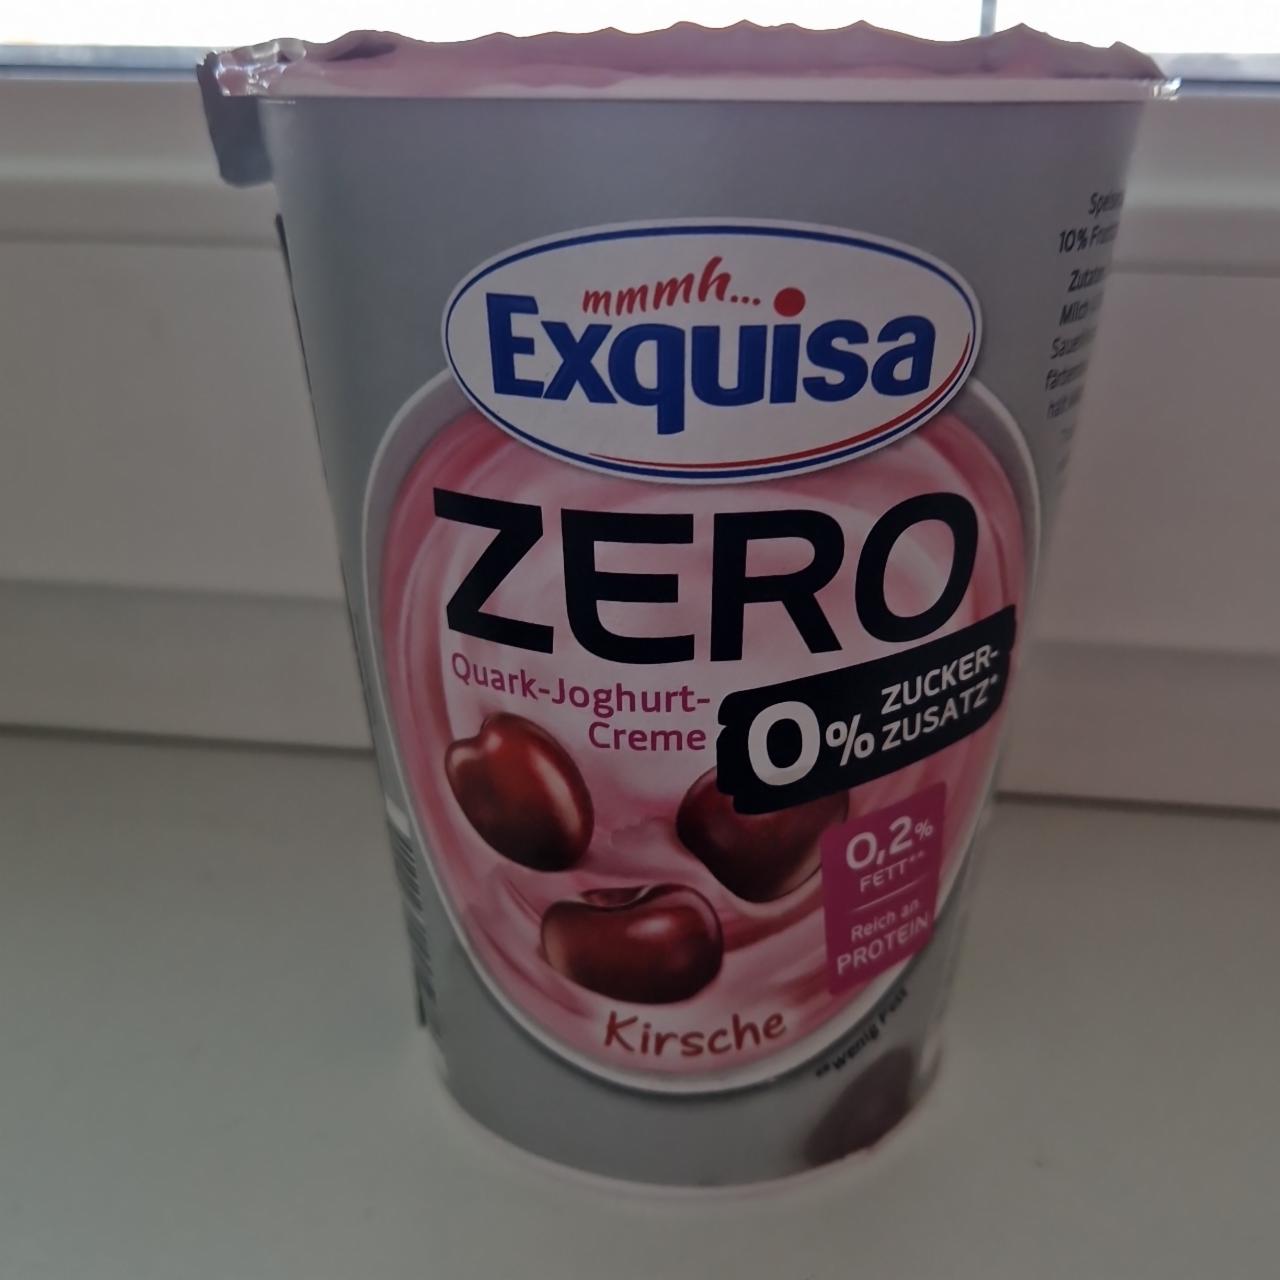 Zero Quark-Joghurt-Creme Kirsche Exquisa - kalórie, kJ a nutričné ...